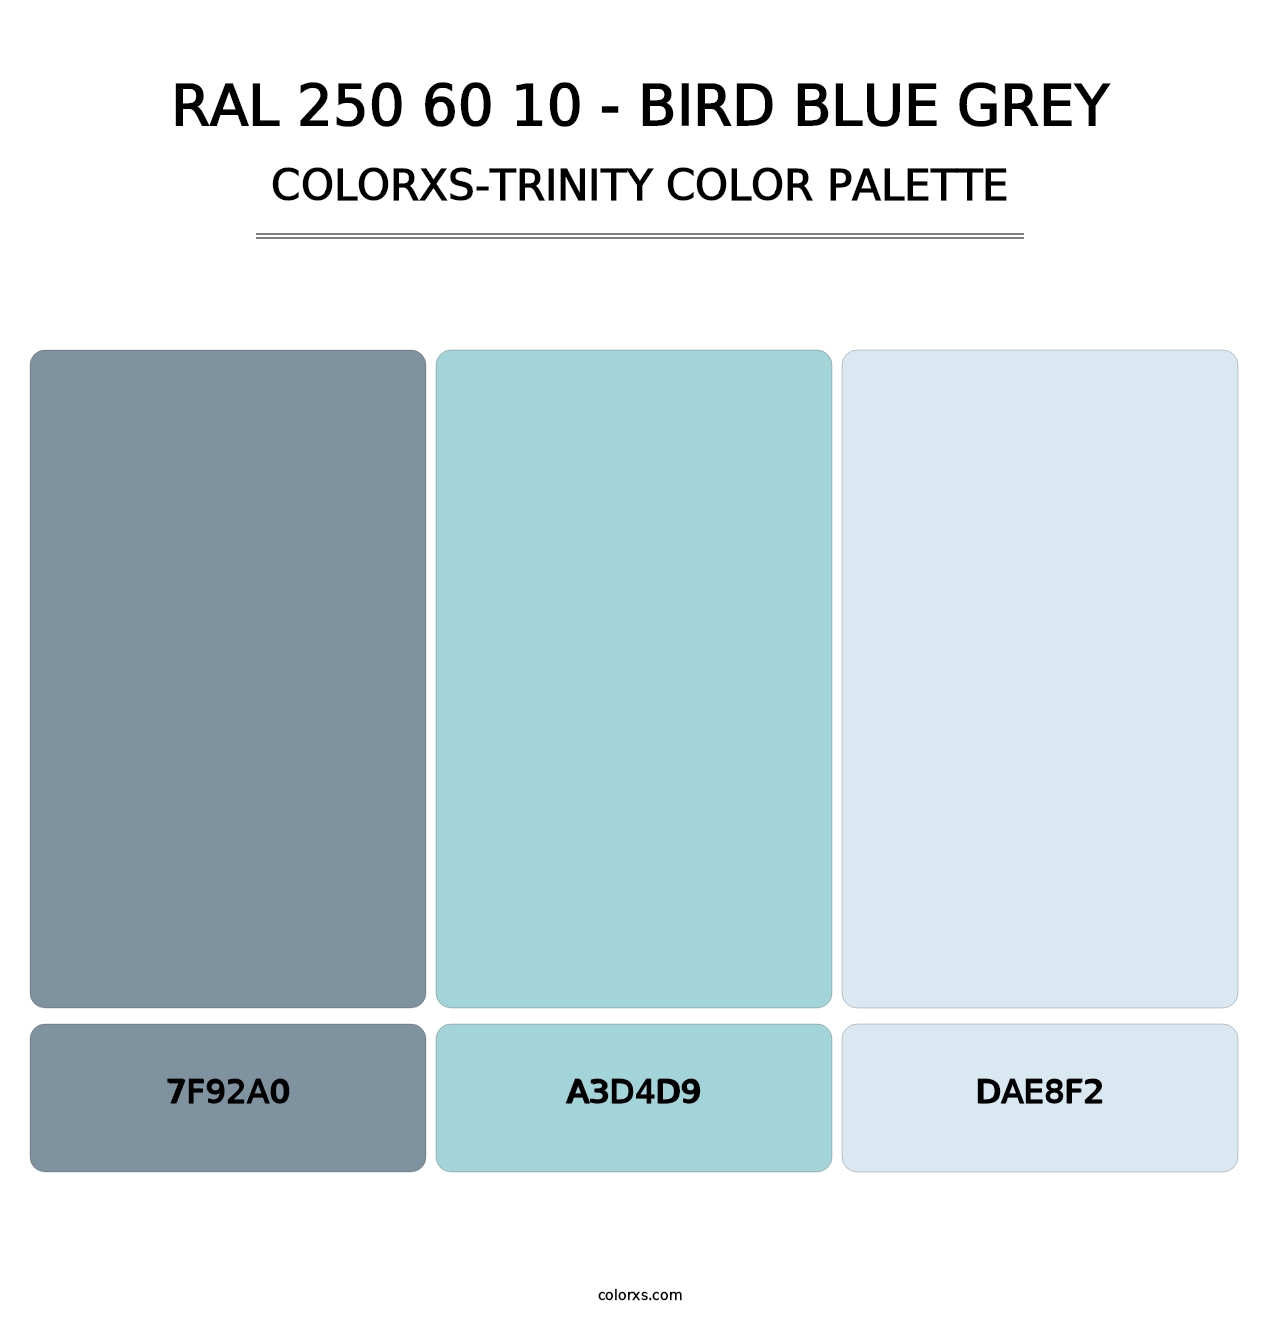 RAL 250 60 10 - Bird Blue Grey - Colorxs Trinity Palette